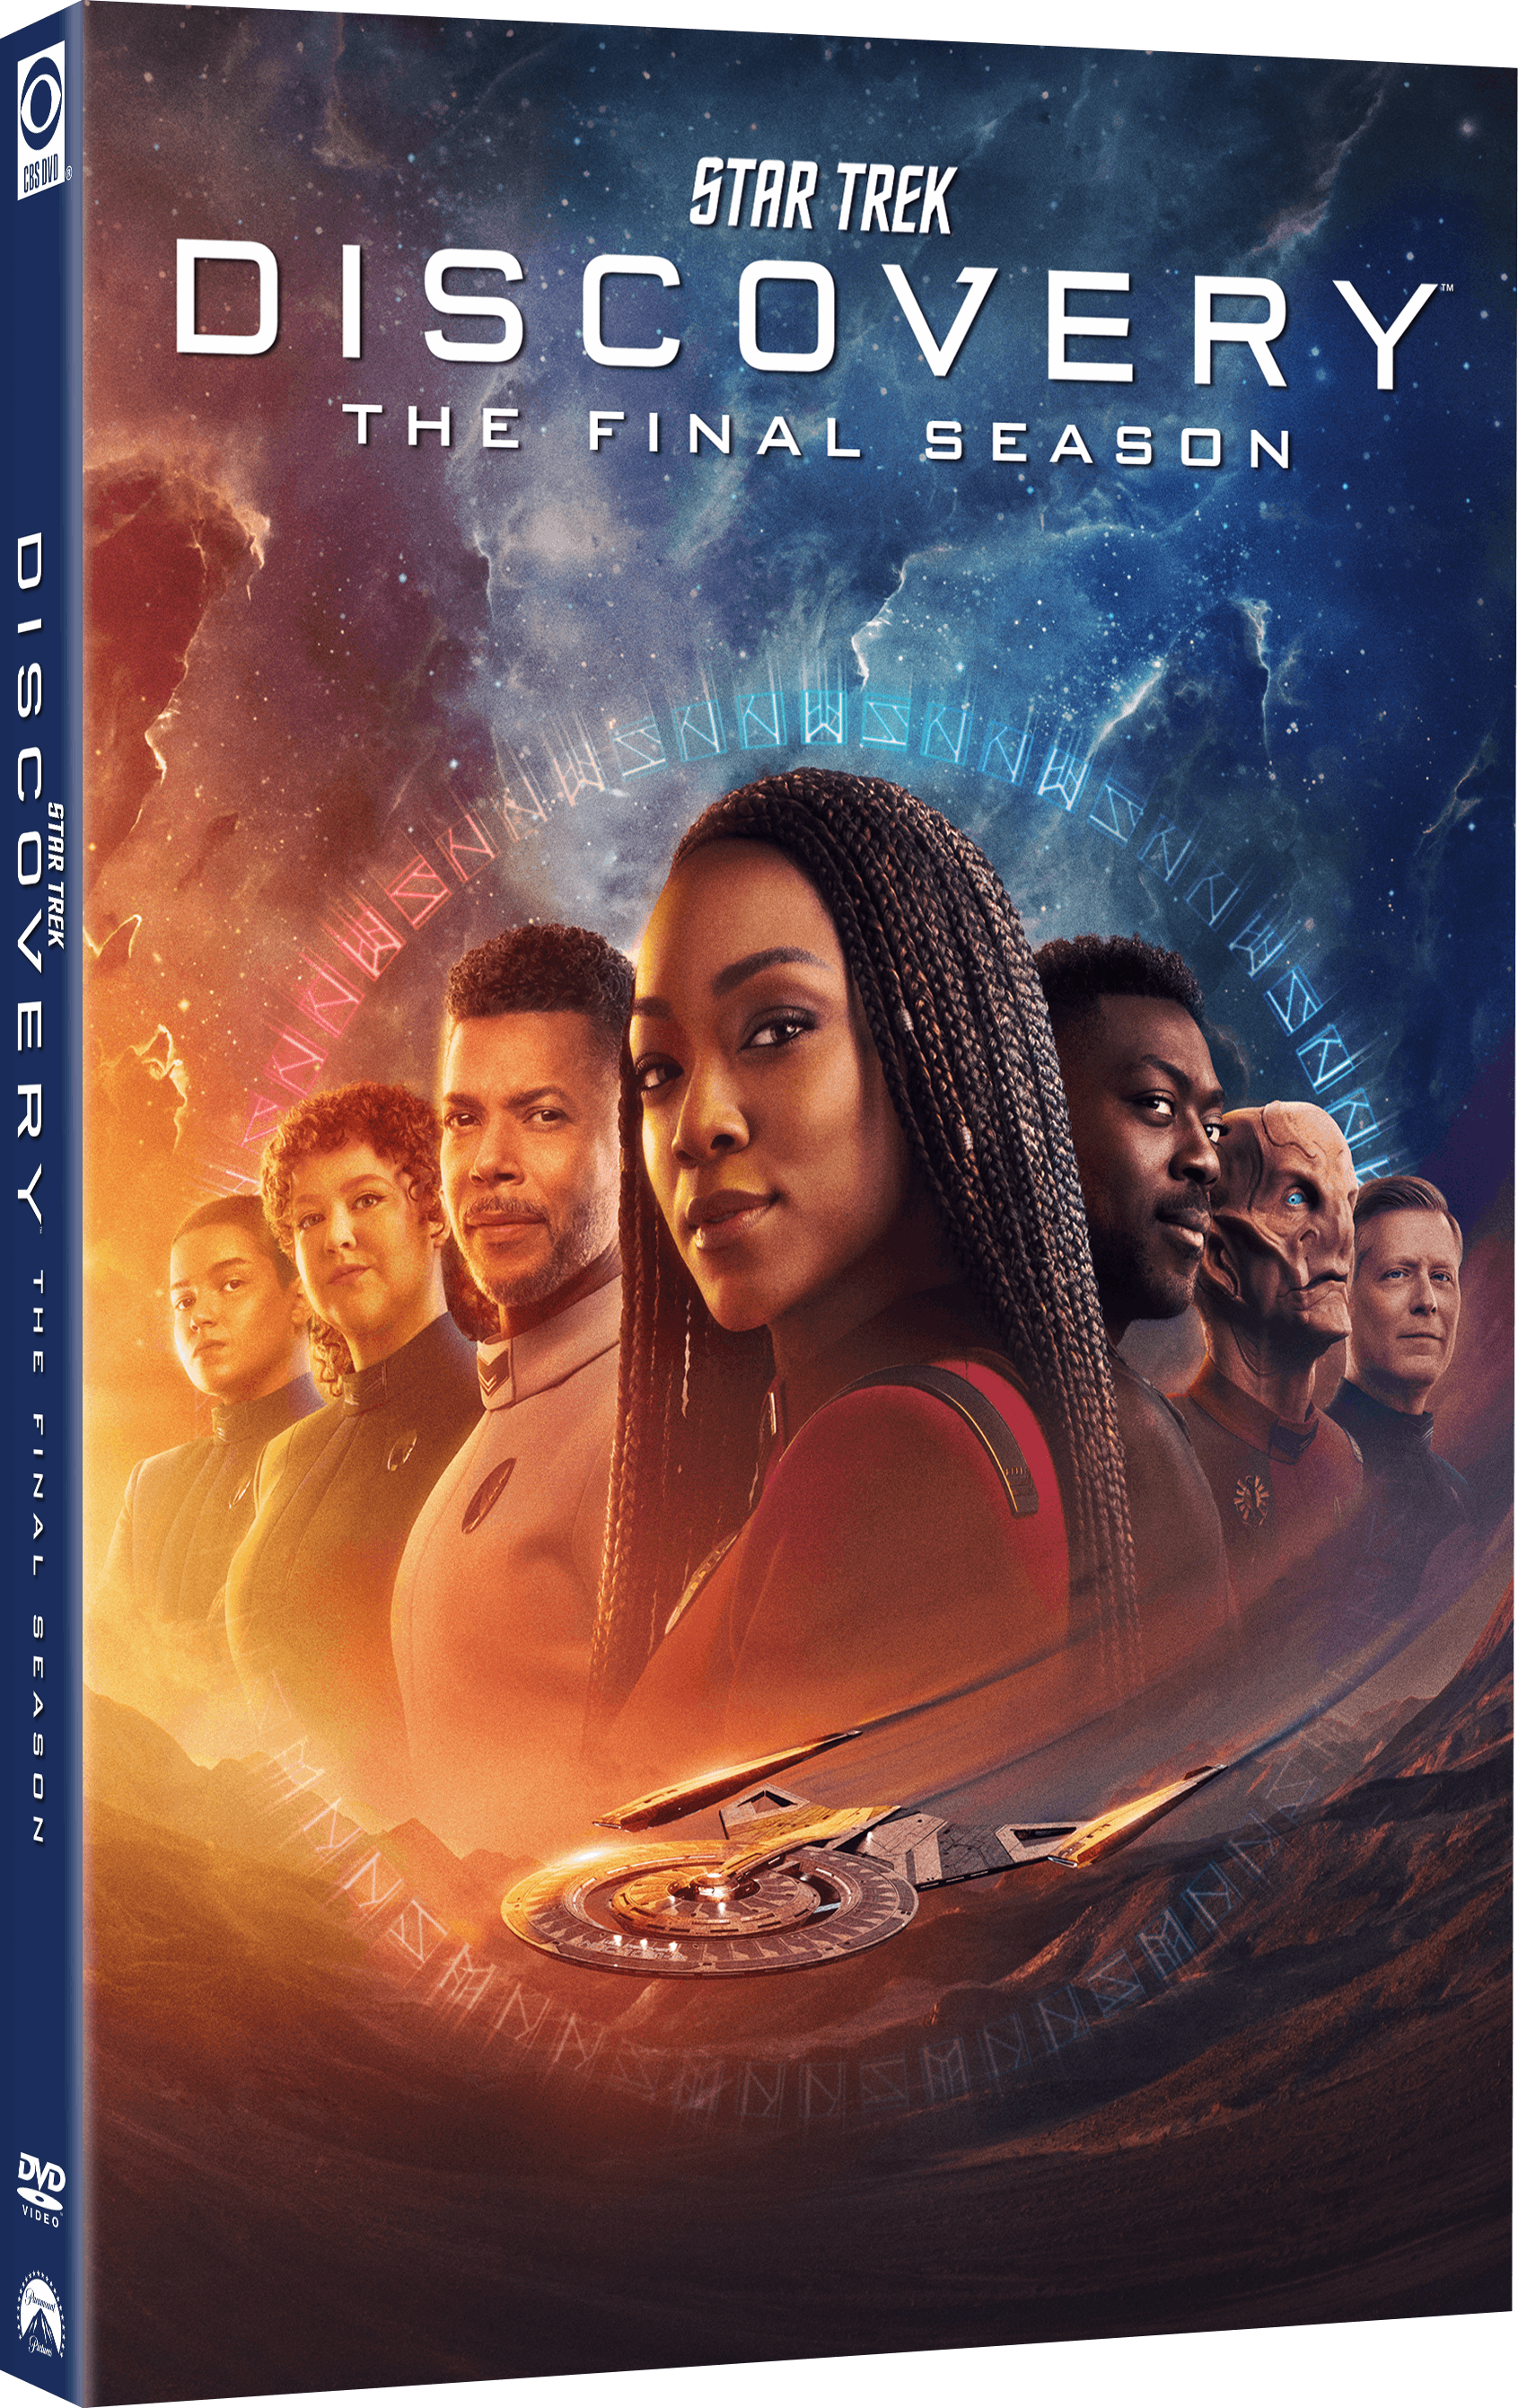 Star Trek: Discovery The Final Season DVD packshot